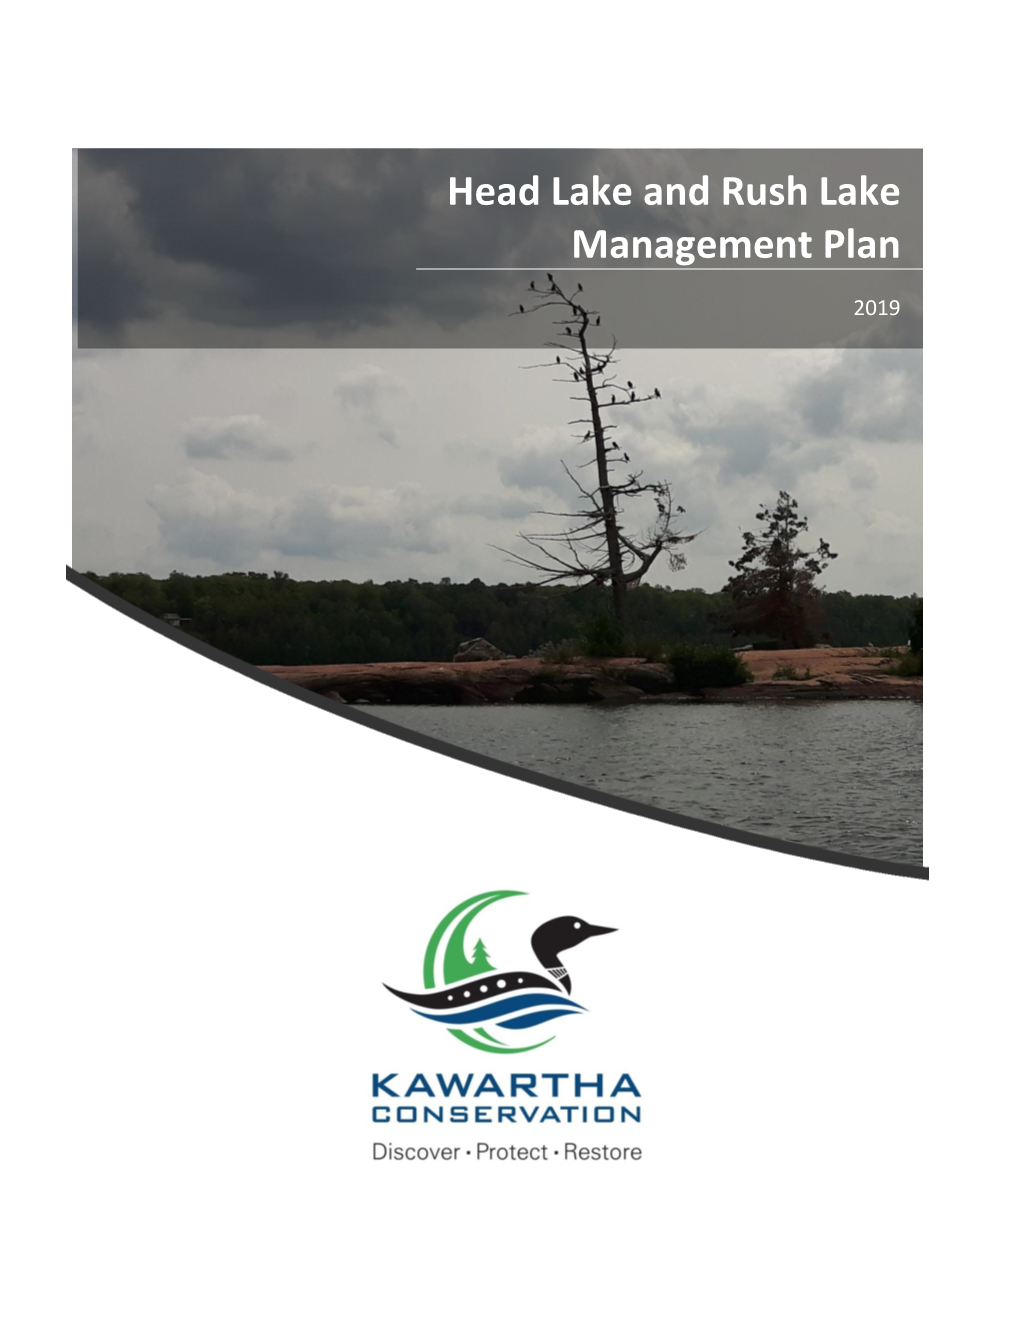 Head Lake and Rush Lake Management Plan